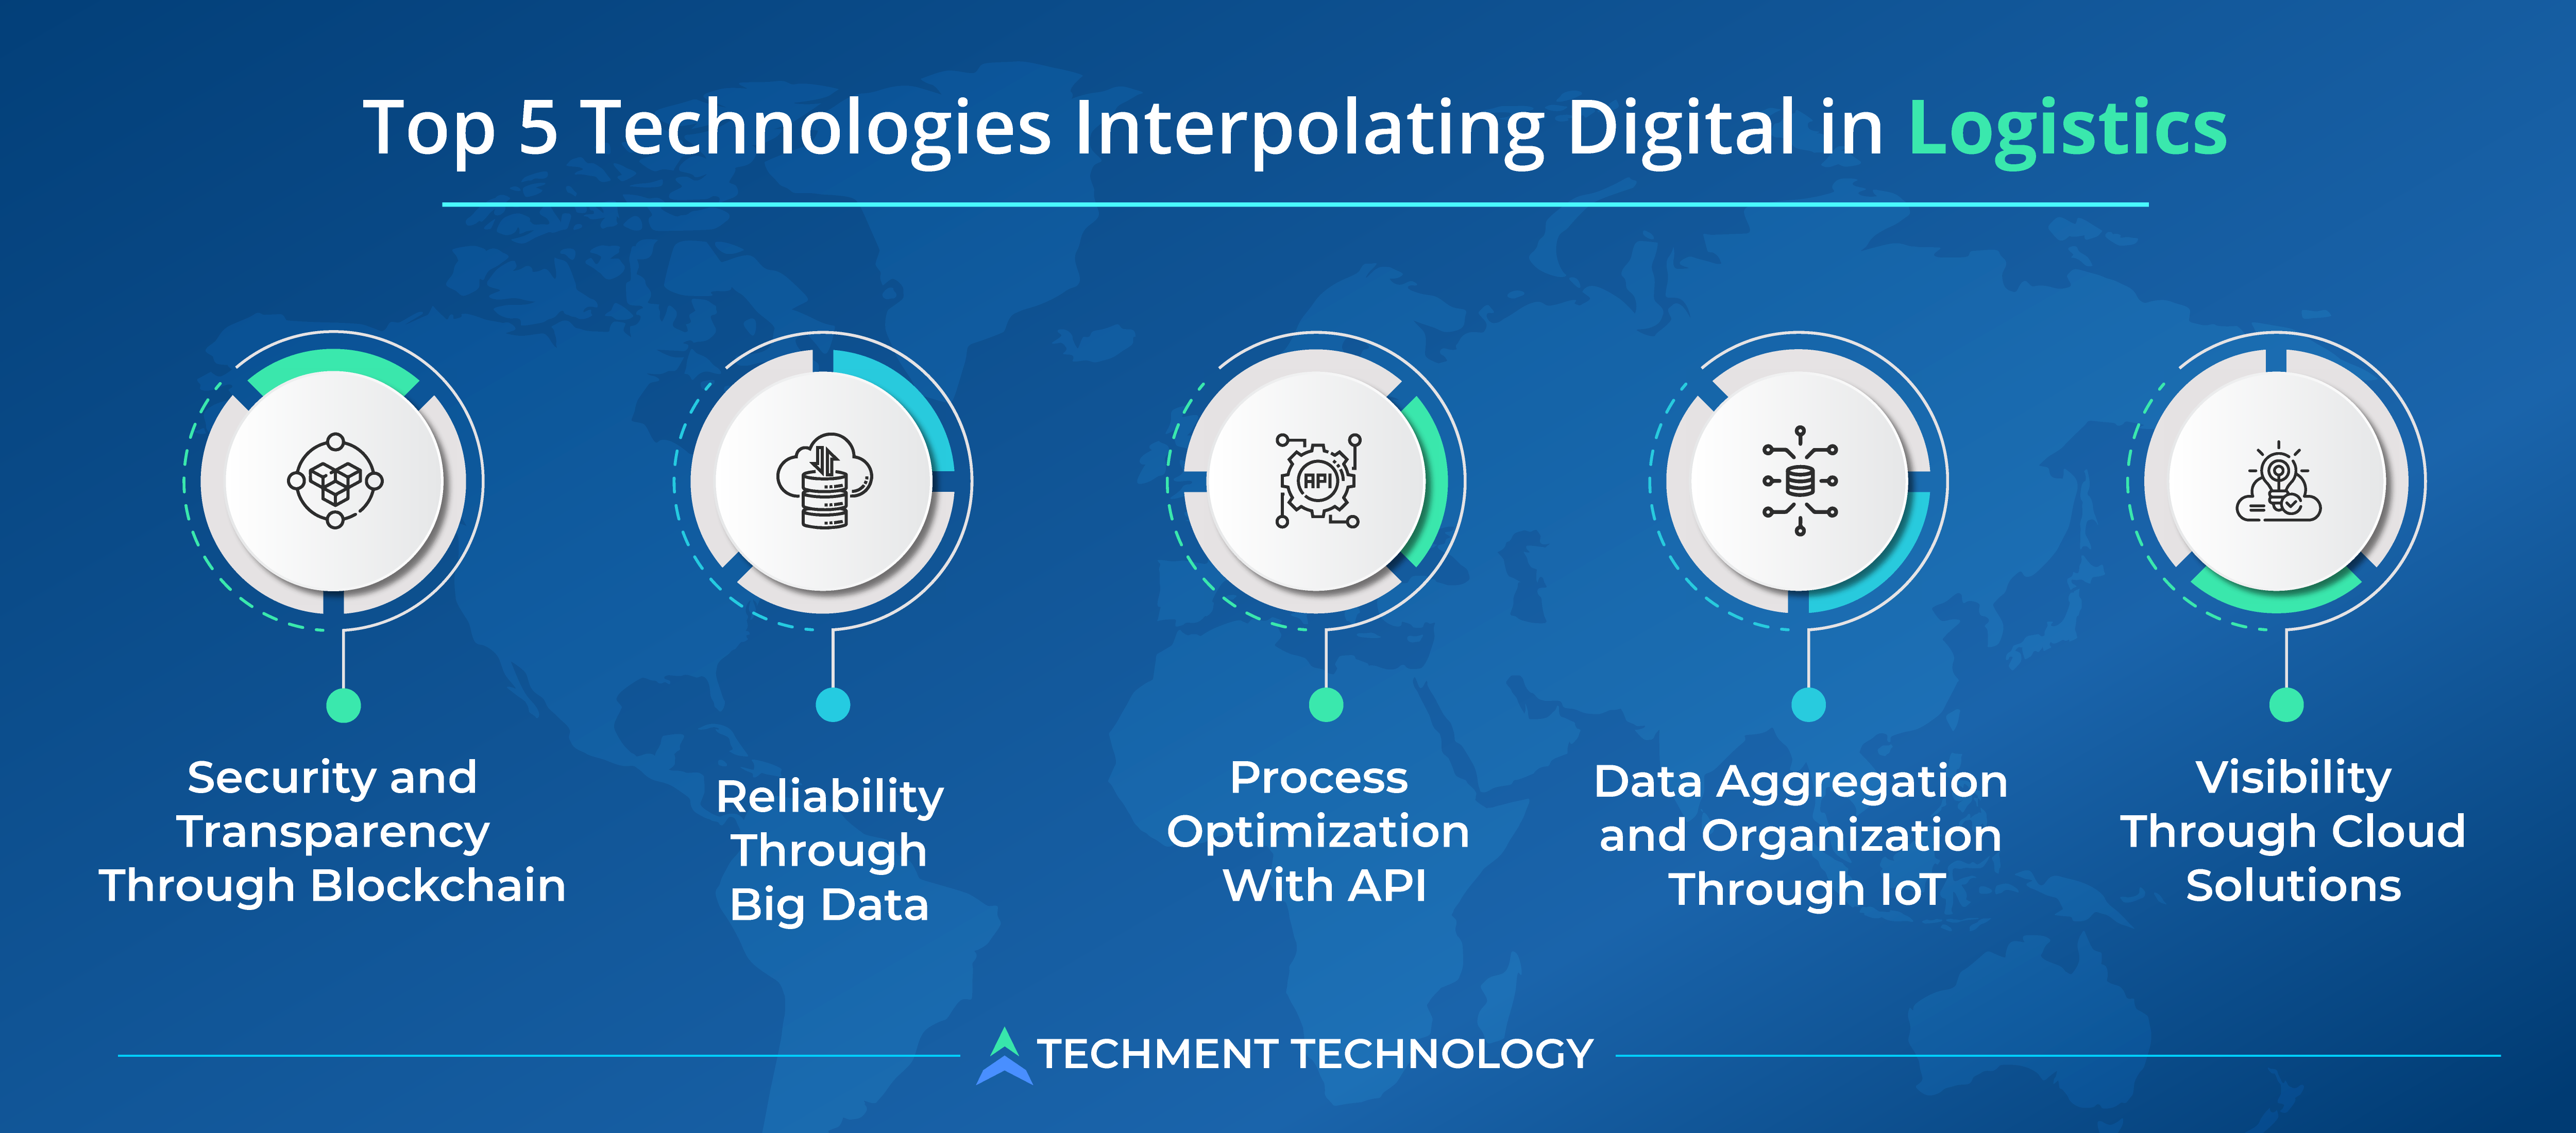 Top 5 Technologies Interpolating Digital in Logistics 